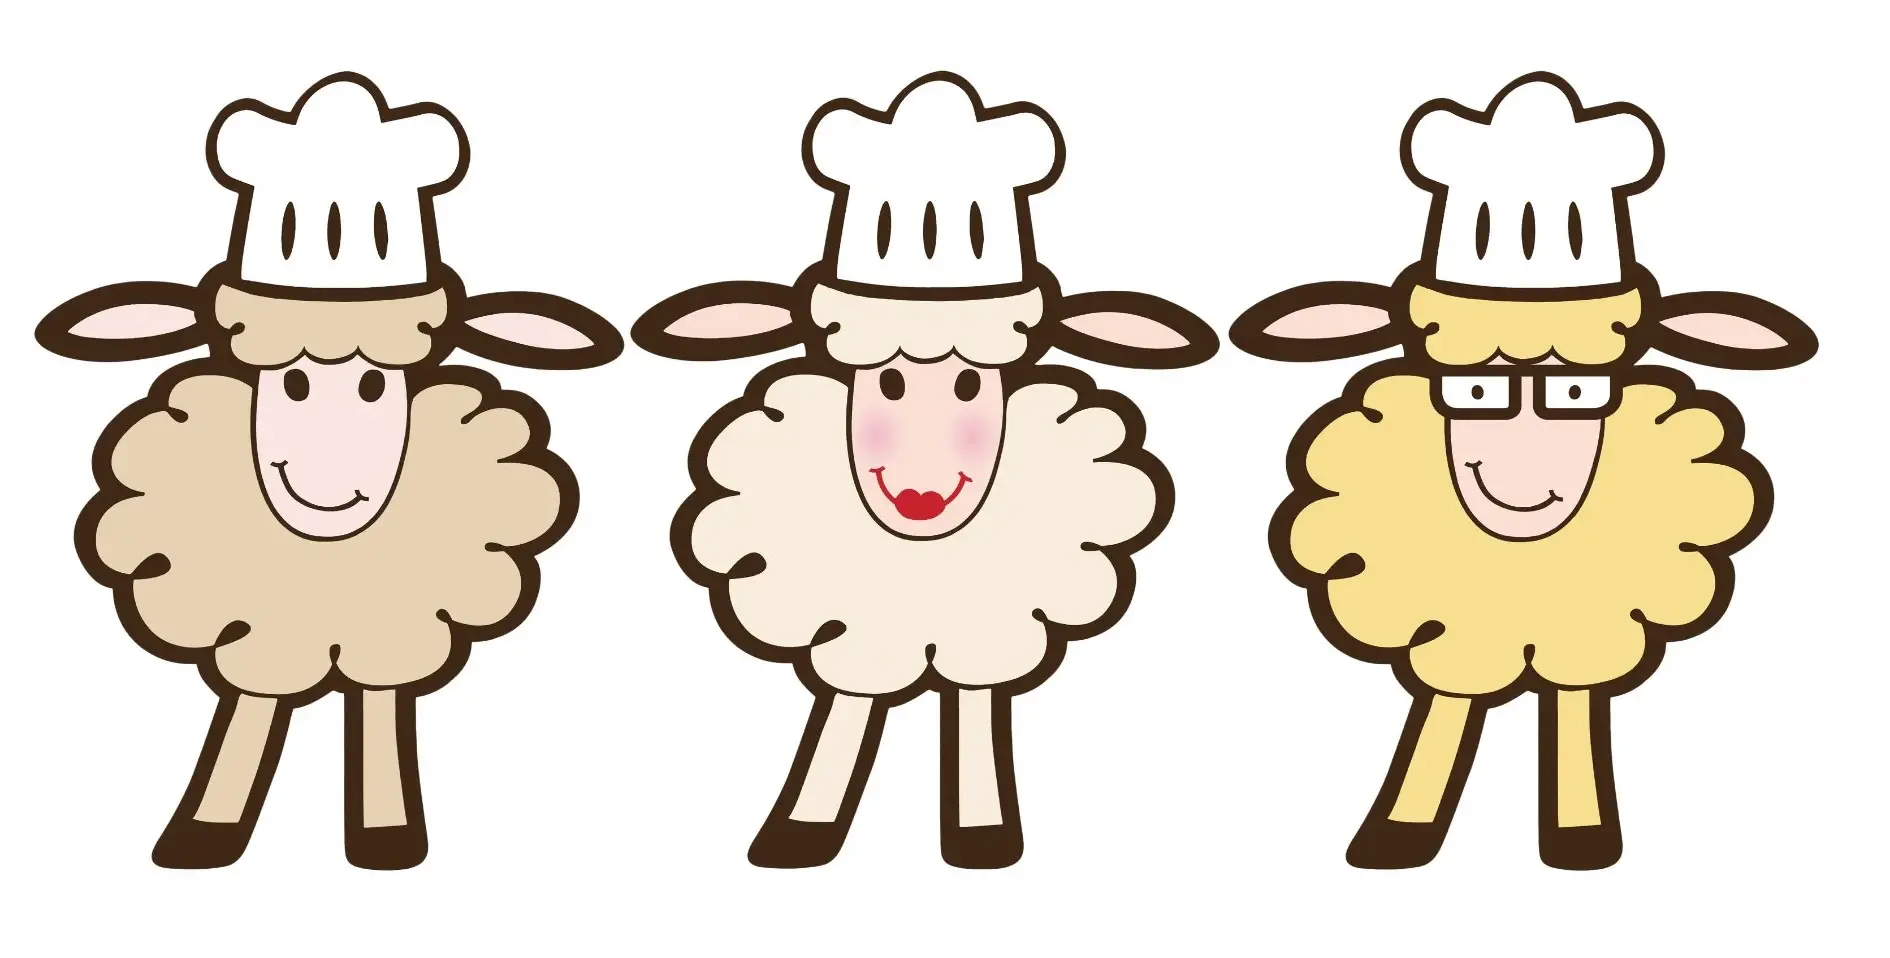 Logo 3 moutons